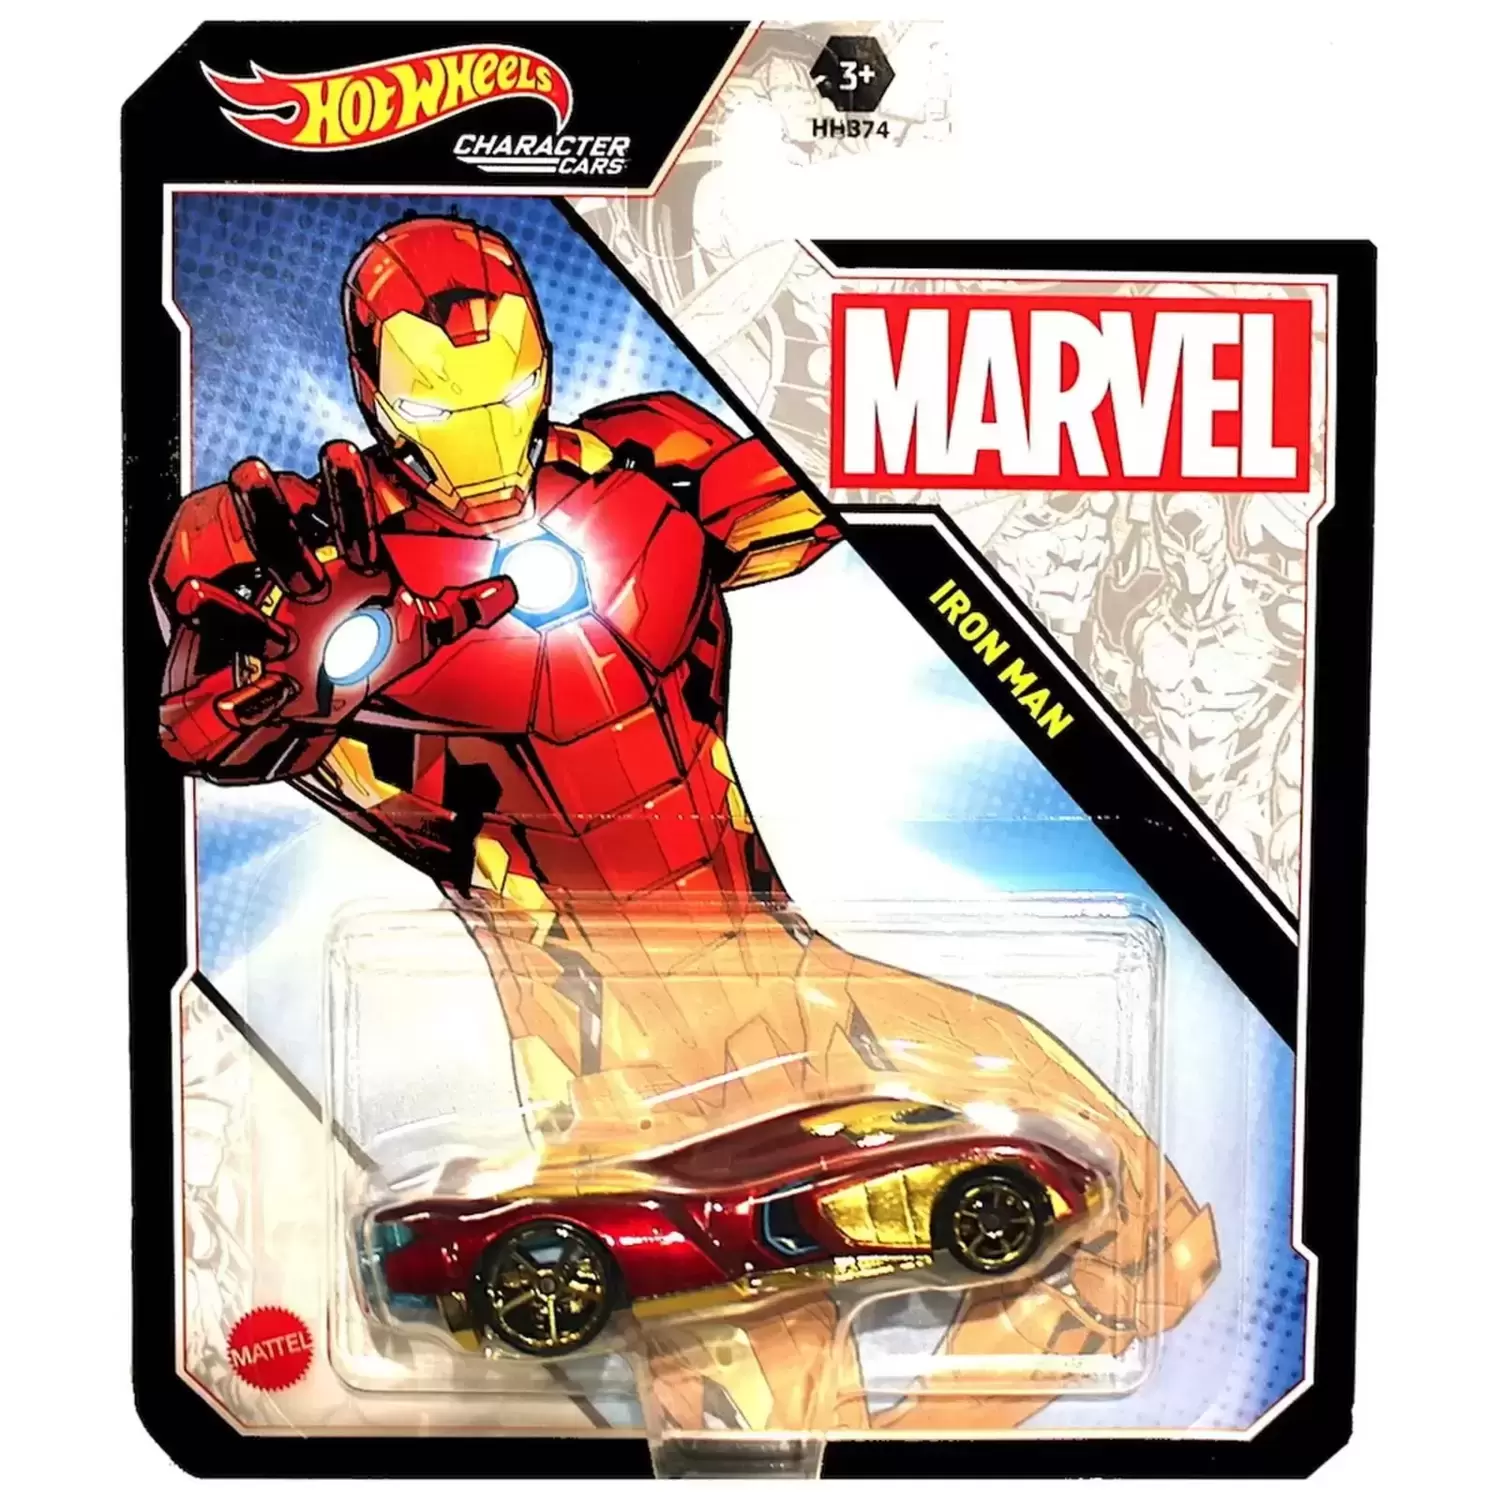 Marvel Character Cars - Iron Man